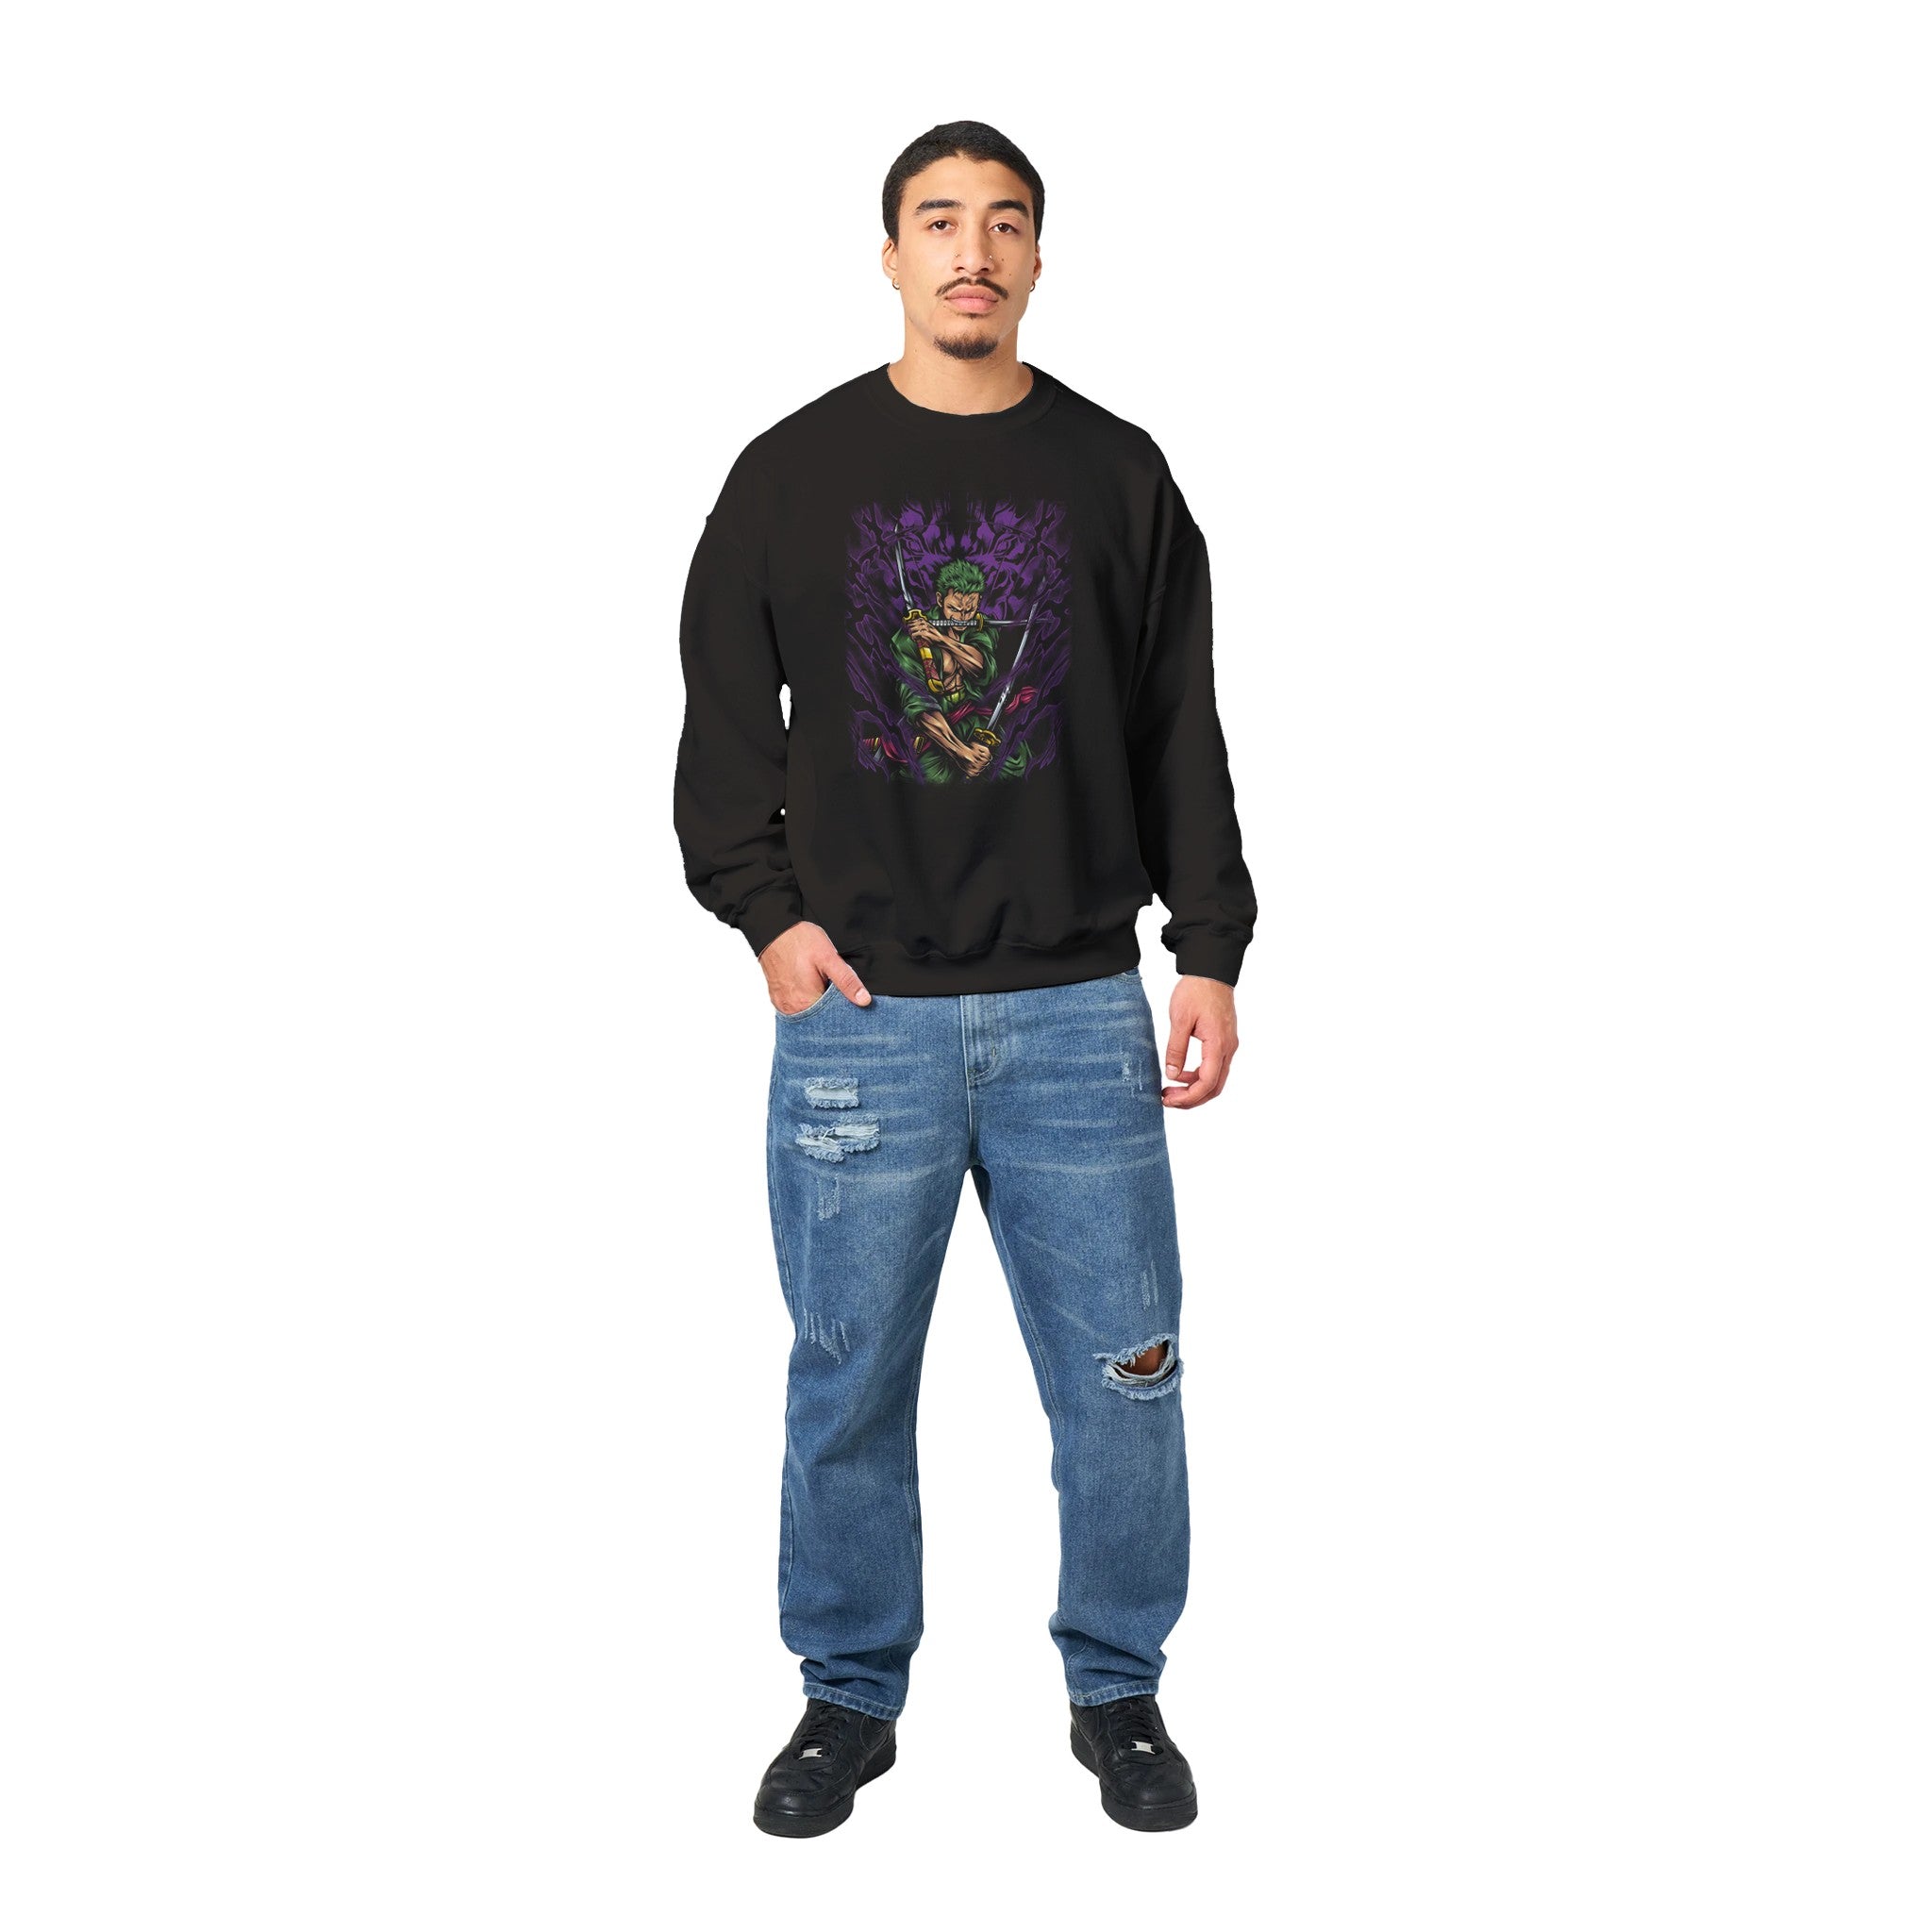 shop and buy One Piece Zoro anime clothing sweatshirt/jumper